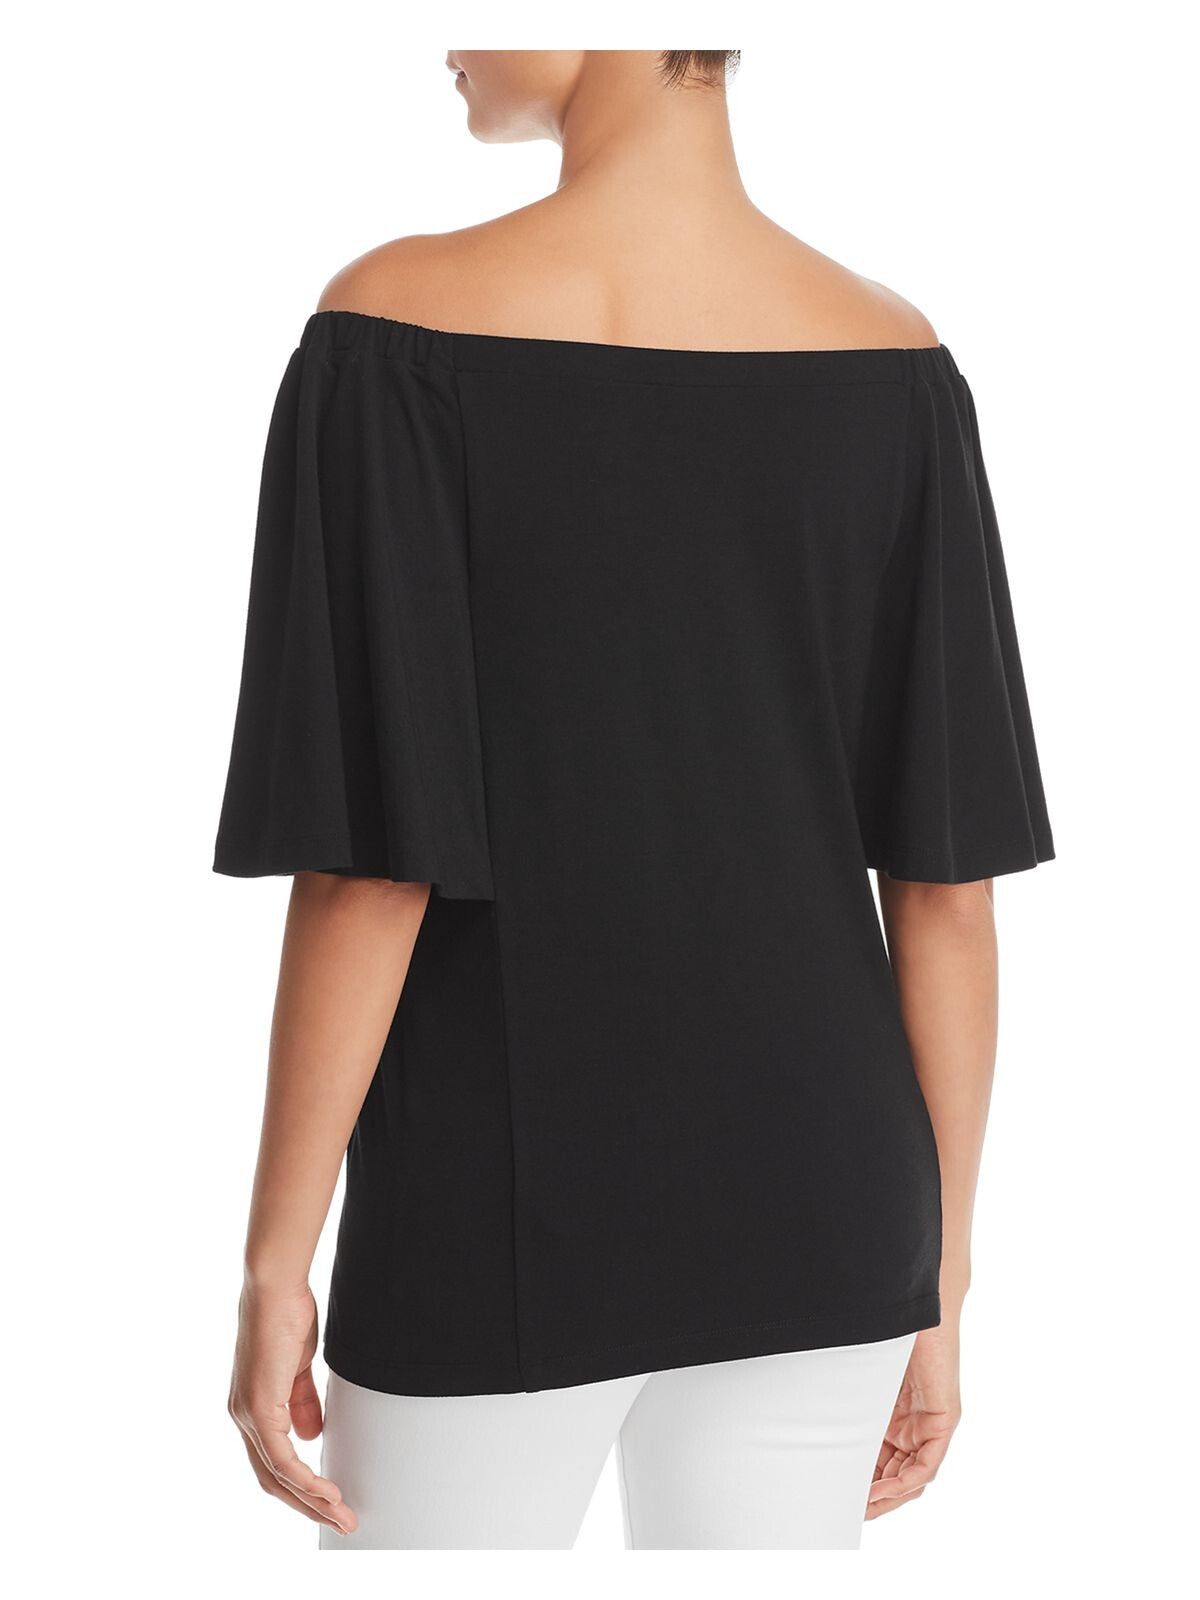 LE GALI Womens Black Short Sleeve Off Shoulder Top Size: XS